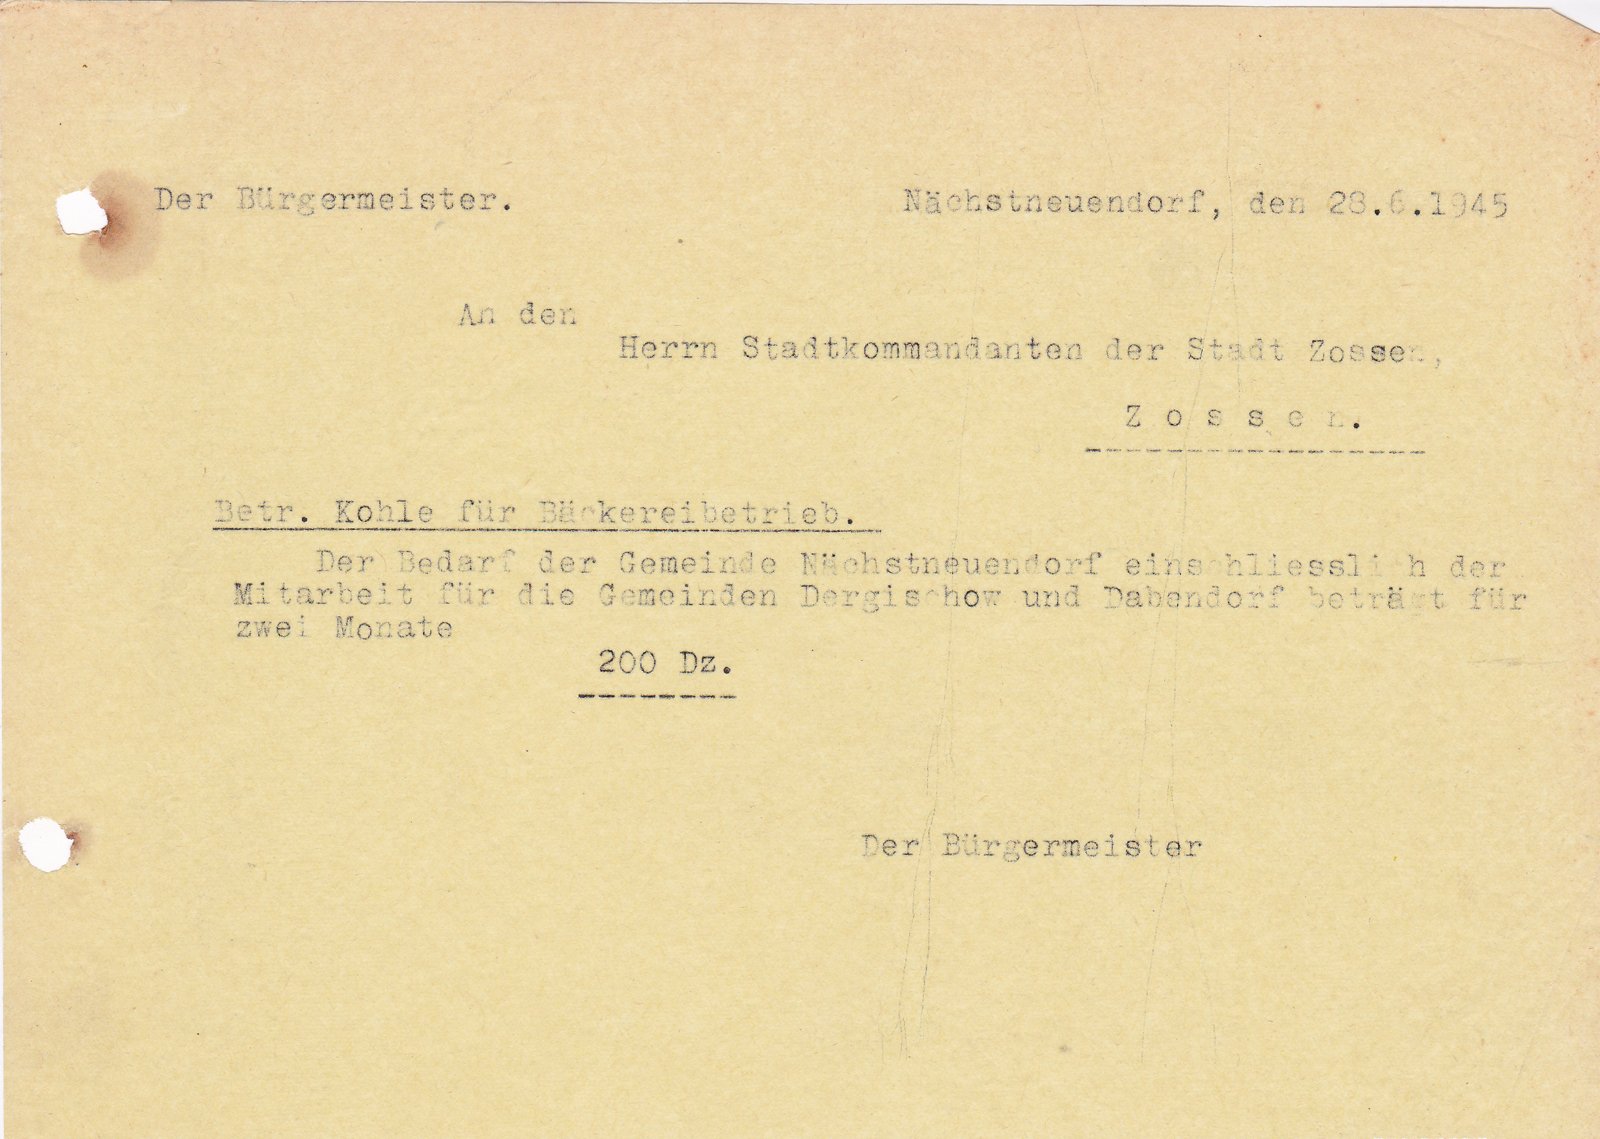 BM N.Neuendorf an Stadtkommandant 23.06.1945 (Heimatverein "Alter Krug" Zossen e.V. CC BY-NC-SA)